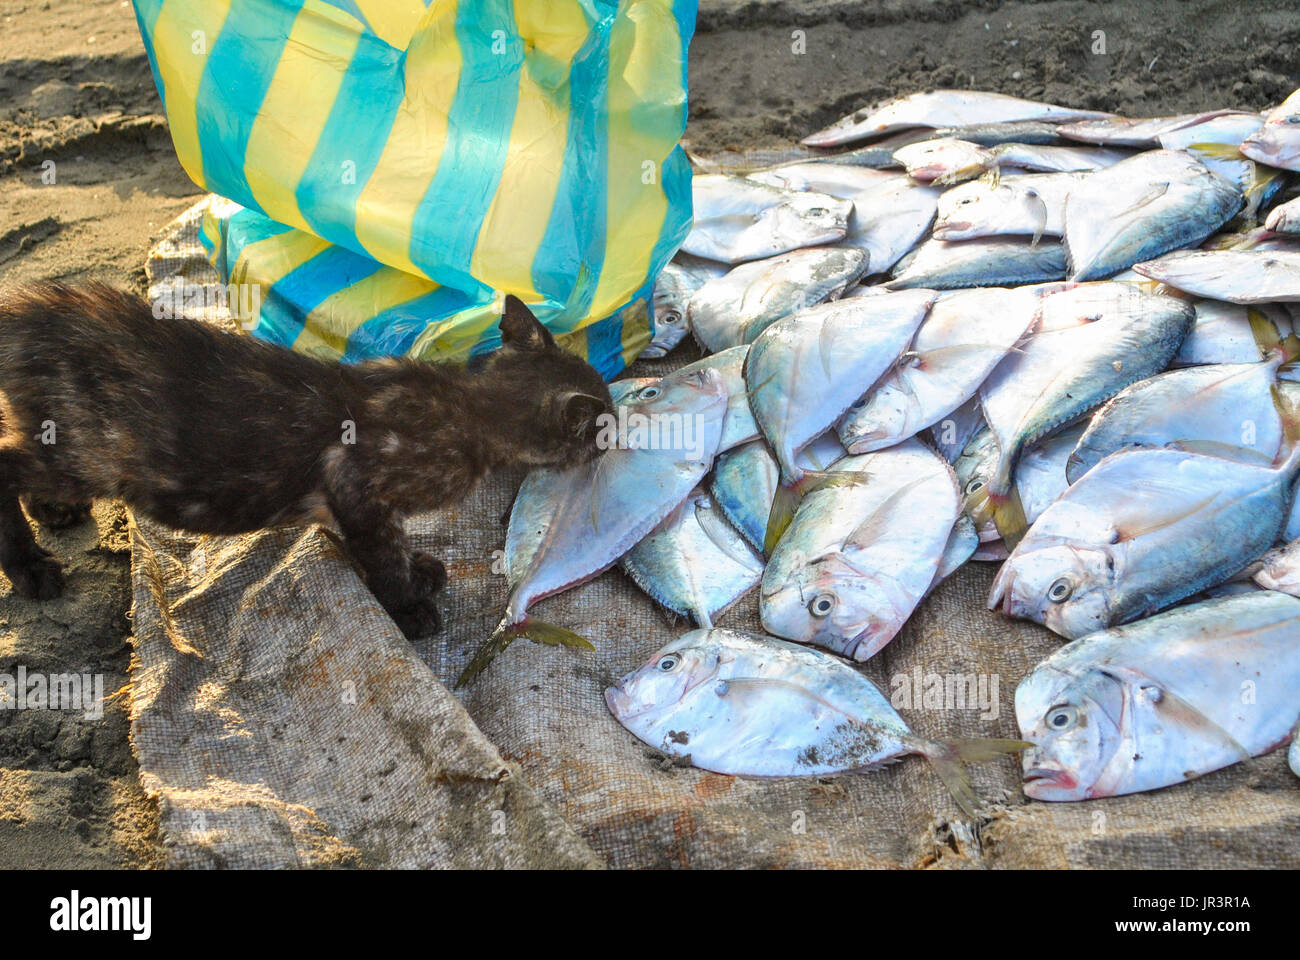 The kitty and the Peruvian moonfish or Carita (Selene peruviana) in the fish market.  Manta. Ecuador. Stock Photo